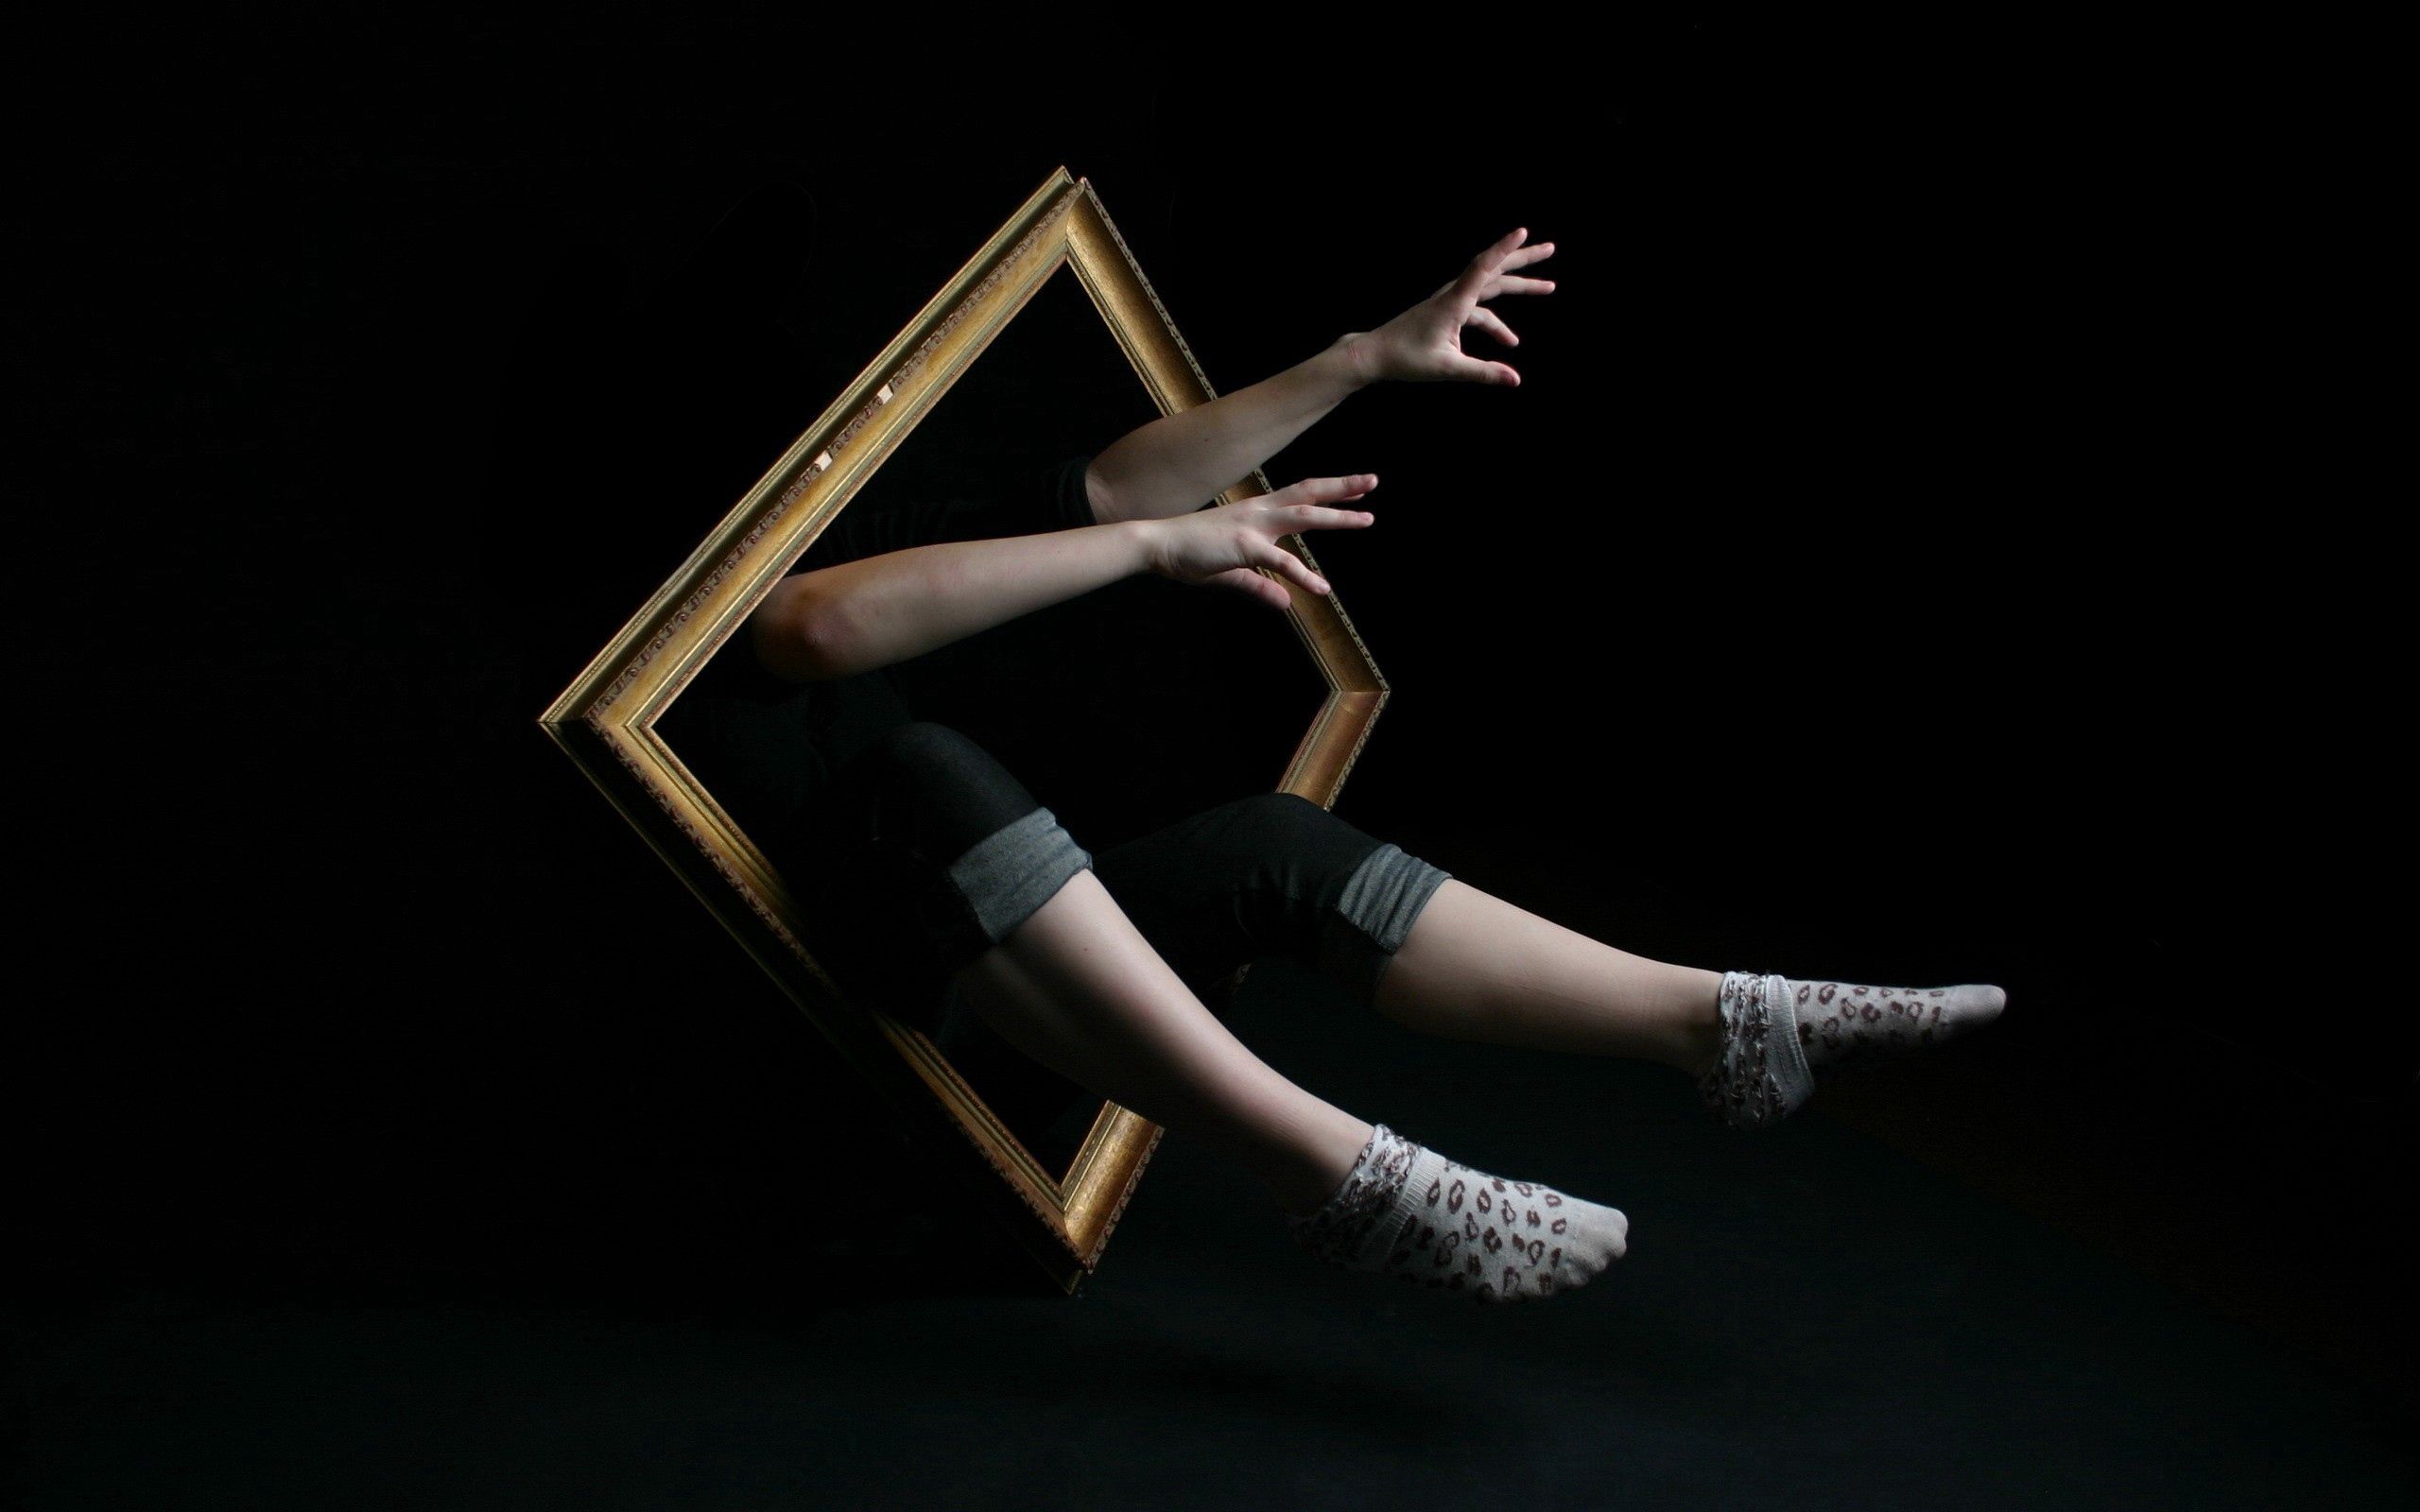 frame, miscellanea, miscellaneous, legs, hands, human, person, imagination, improvisation, surrealism